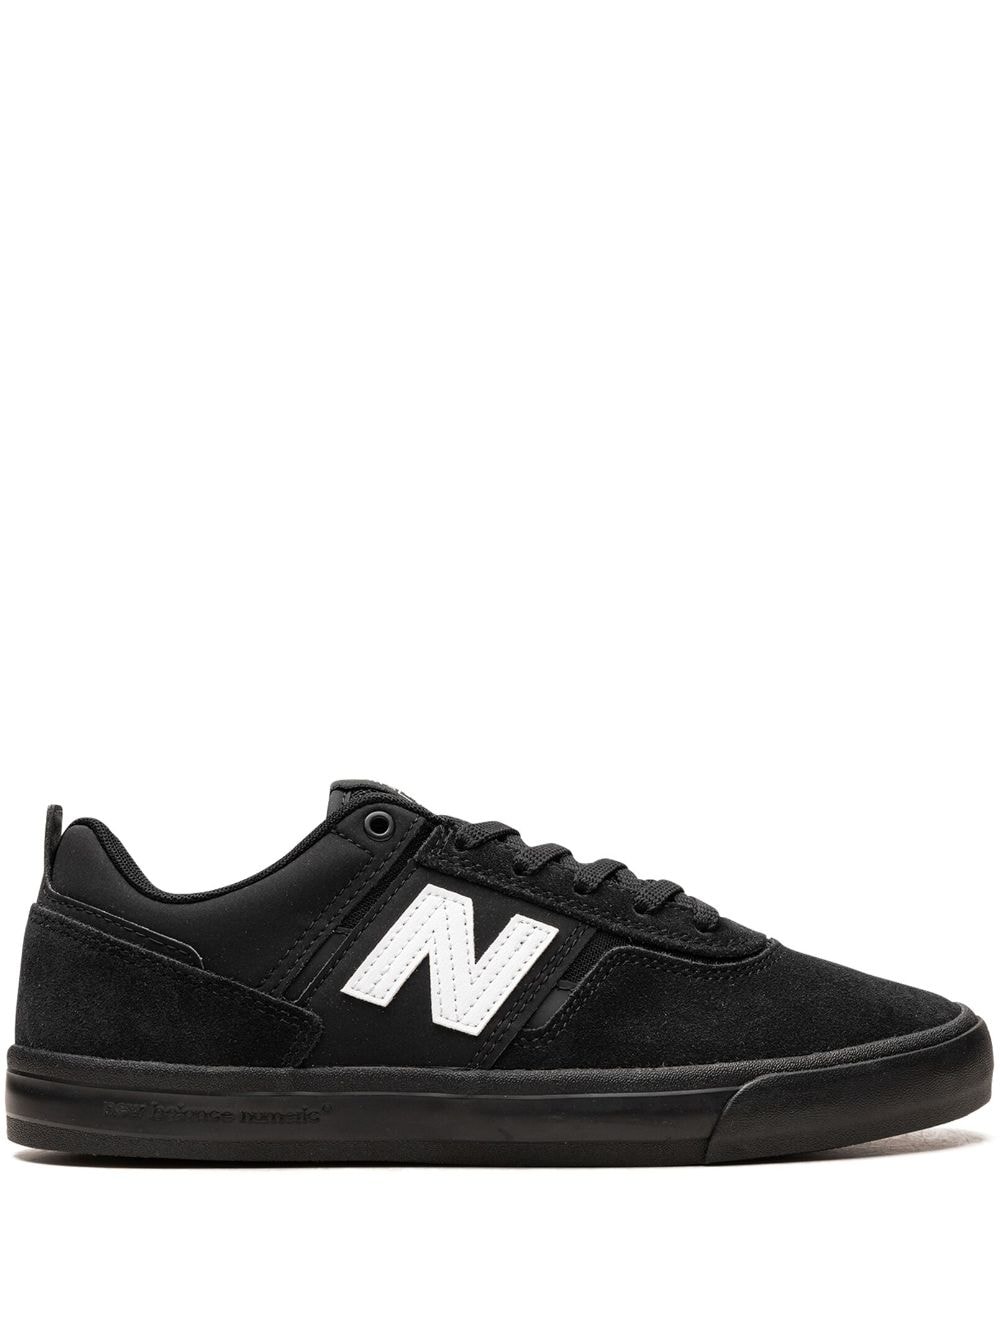 New Balance x Jamie Foy Numeric 306 "Black/White" sneakers